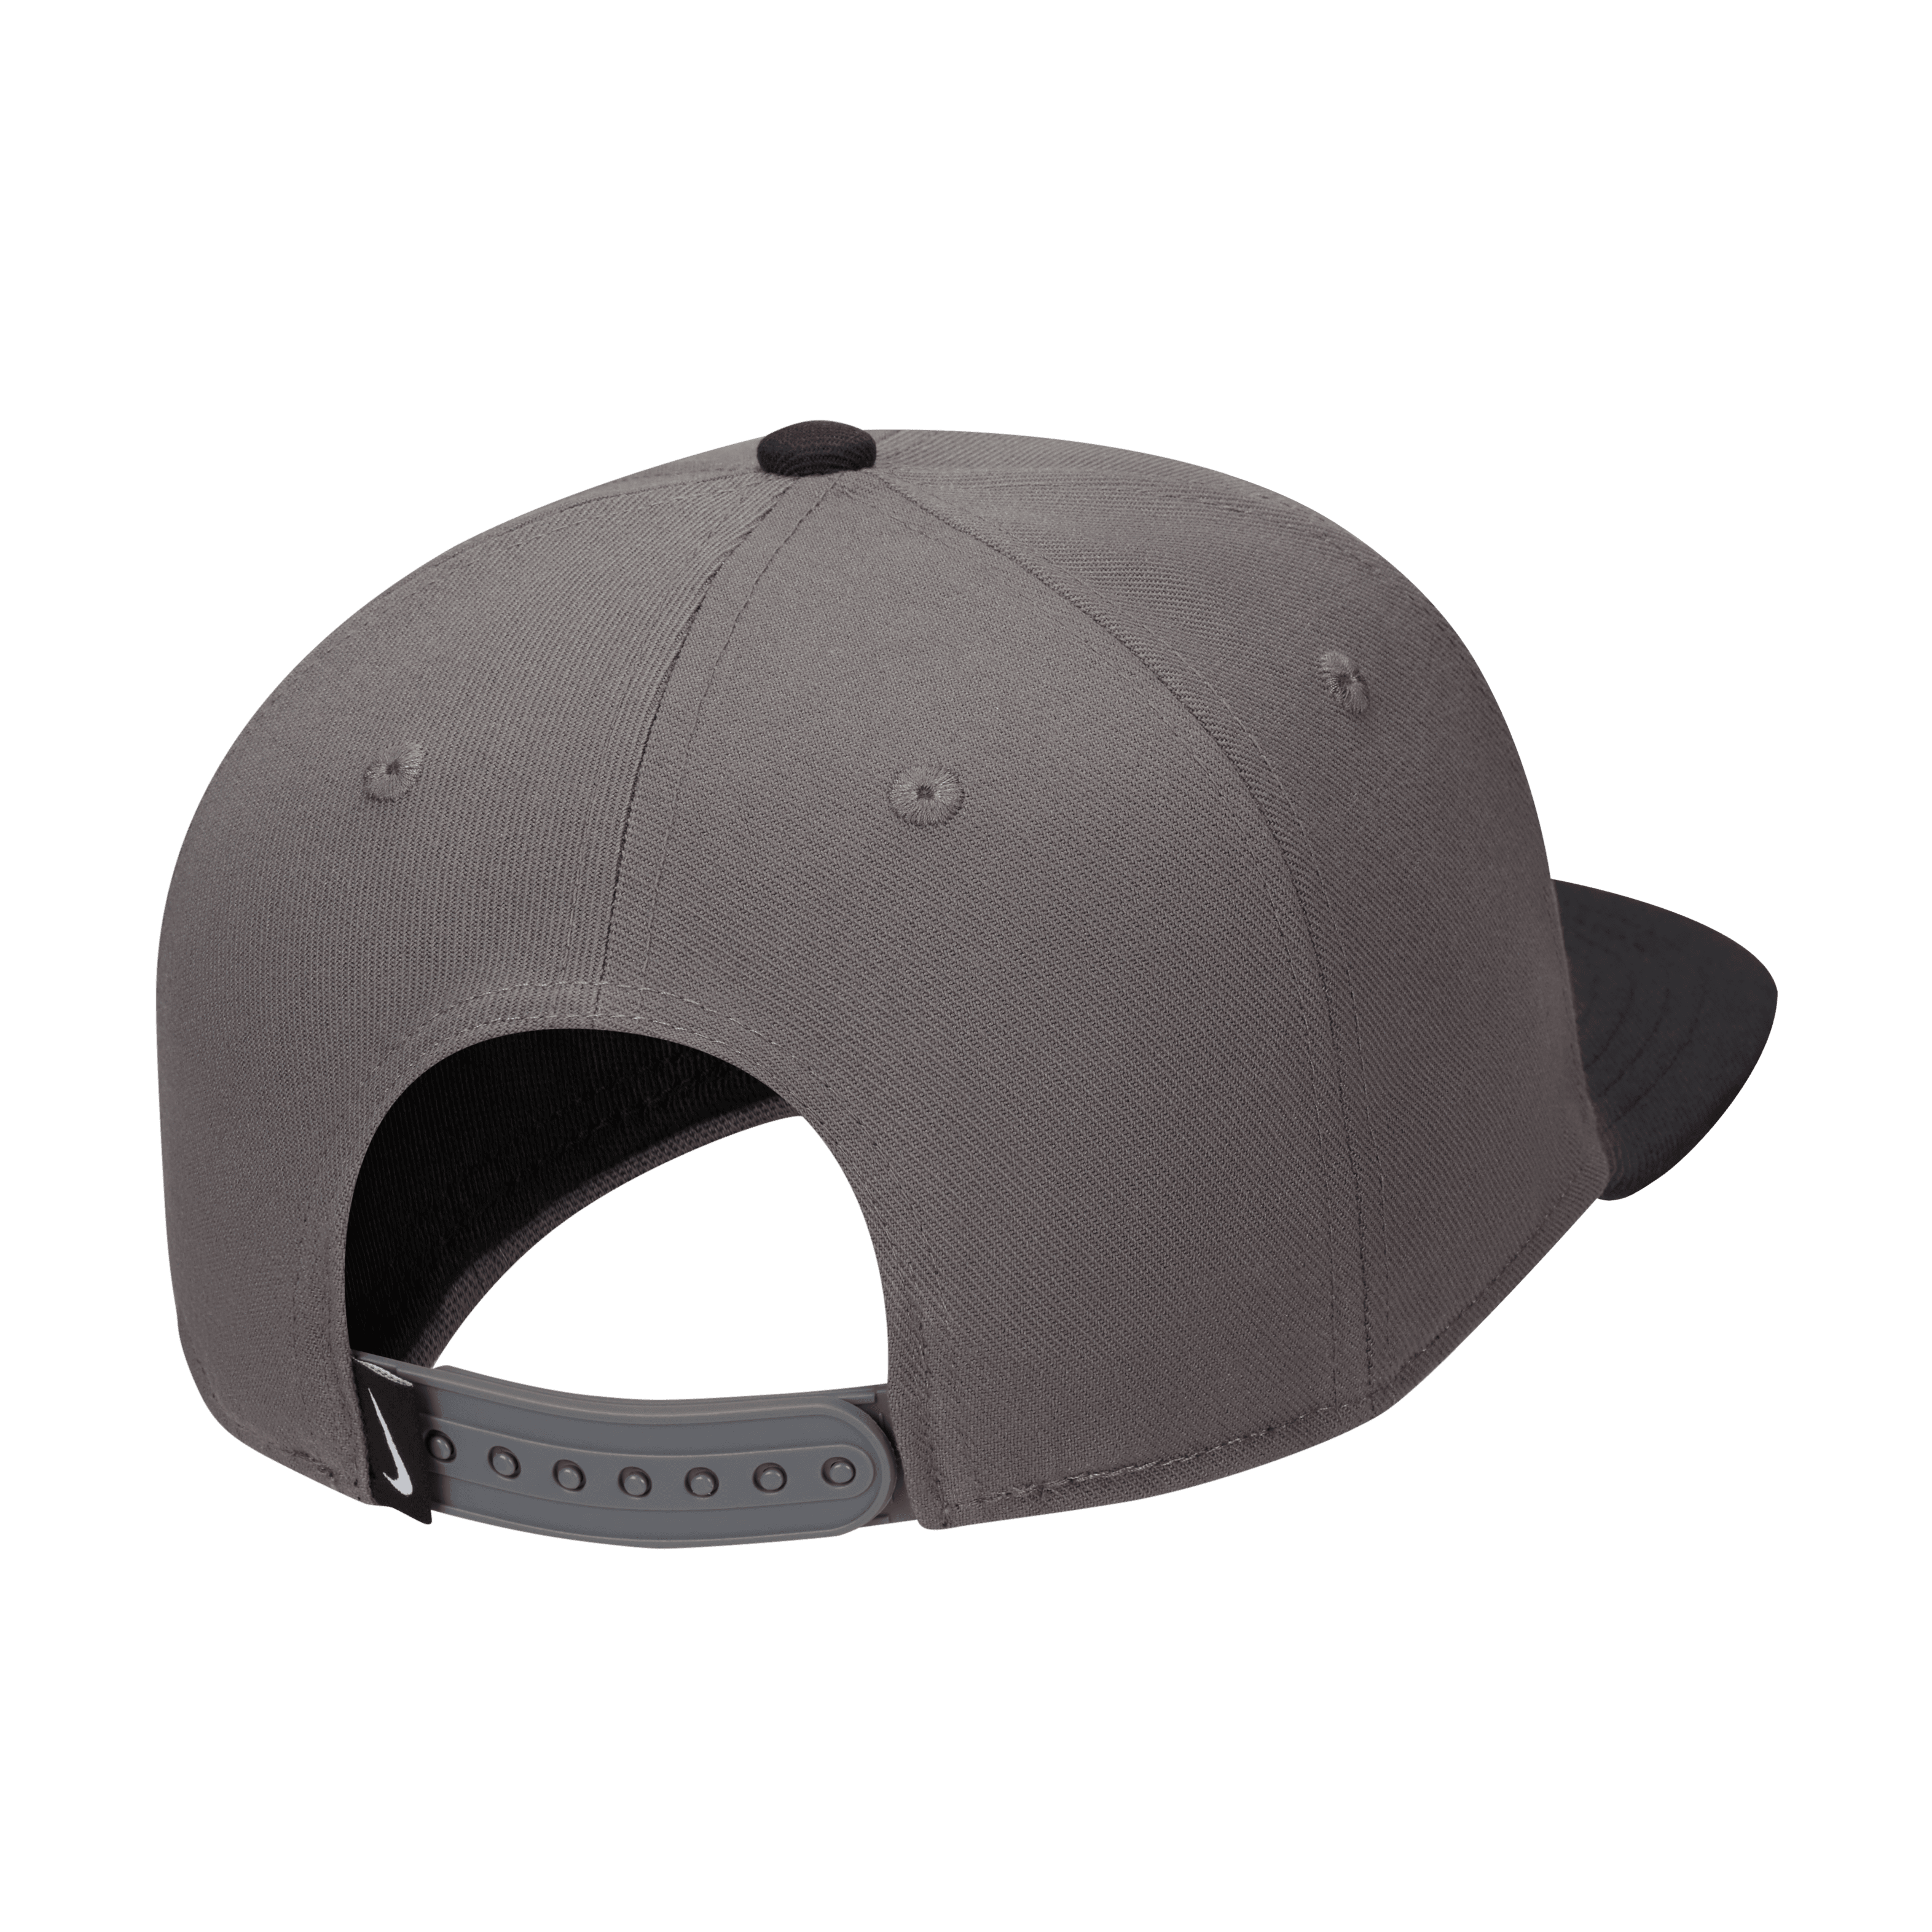 Nike Dri-FIT Pro Structured Futura Cap-Grey/Black